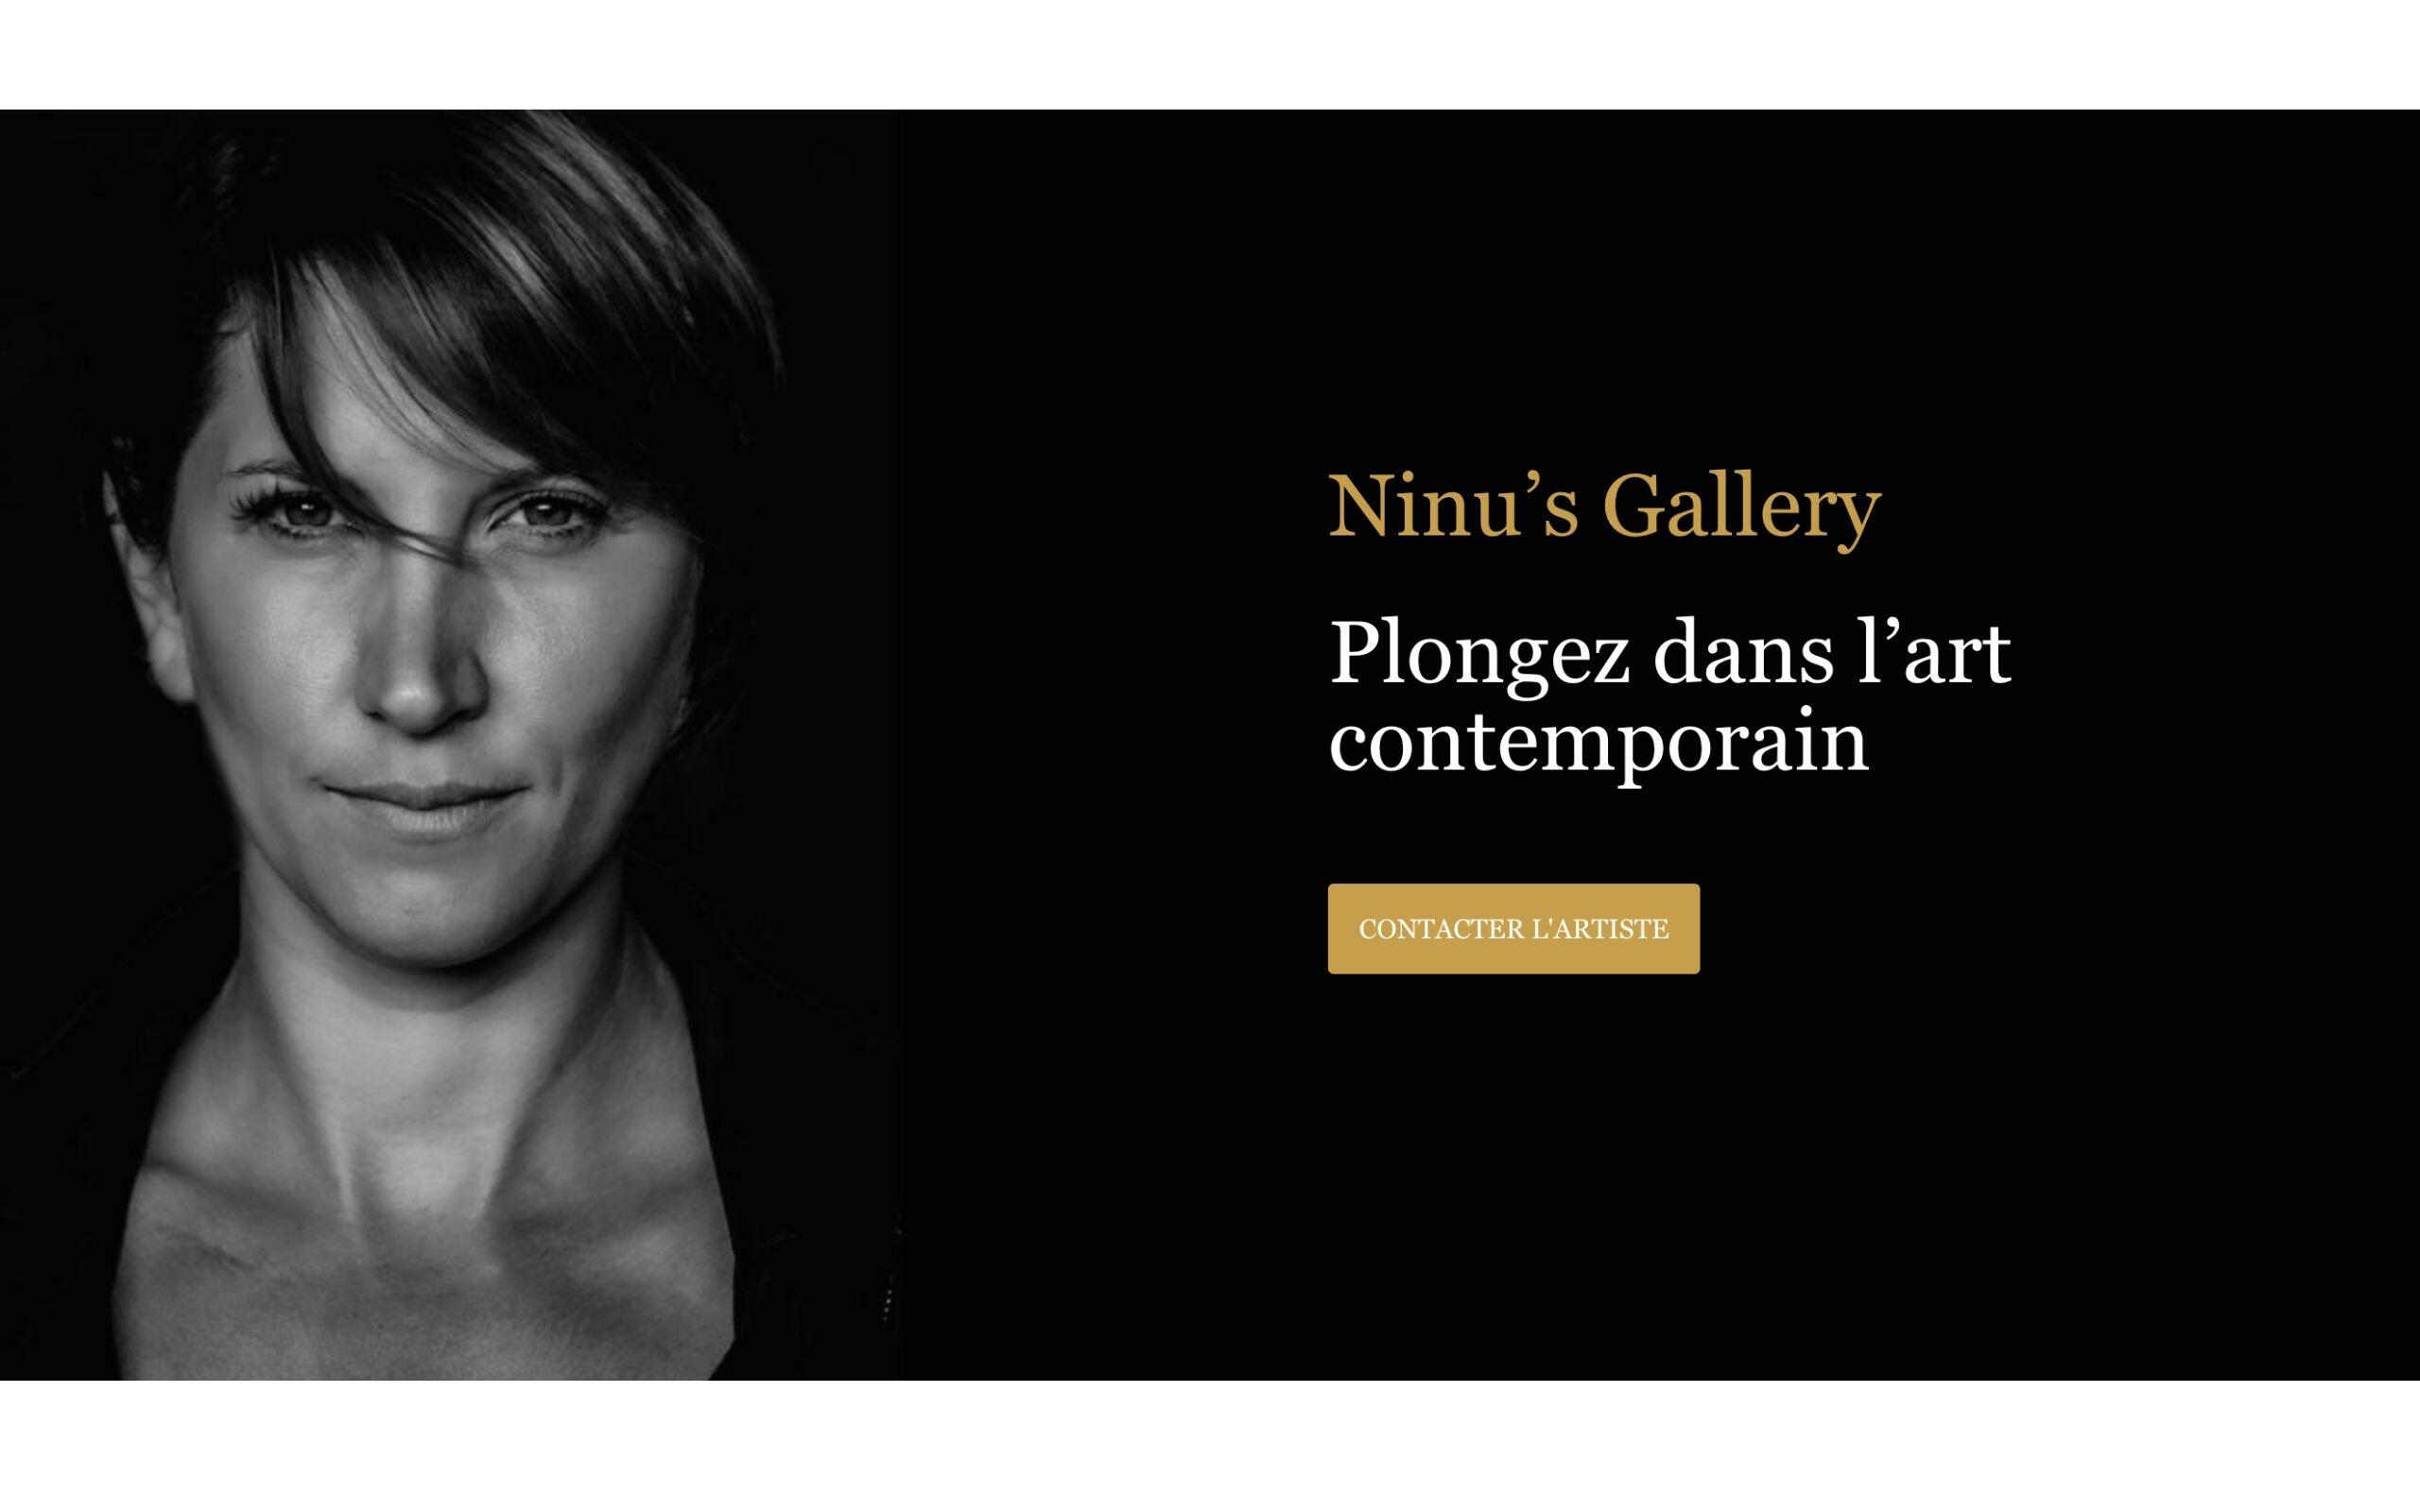 Ninu's Gallery